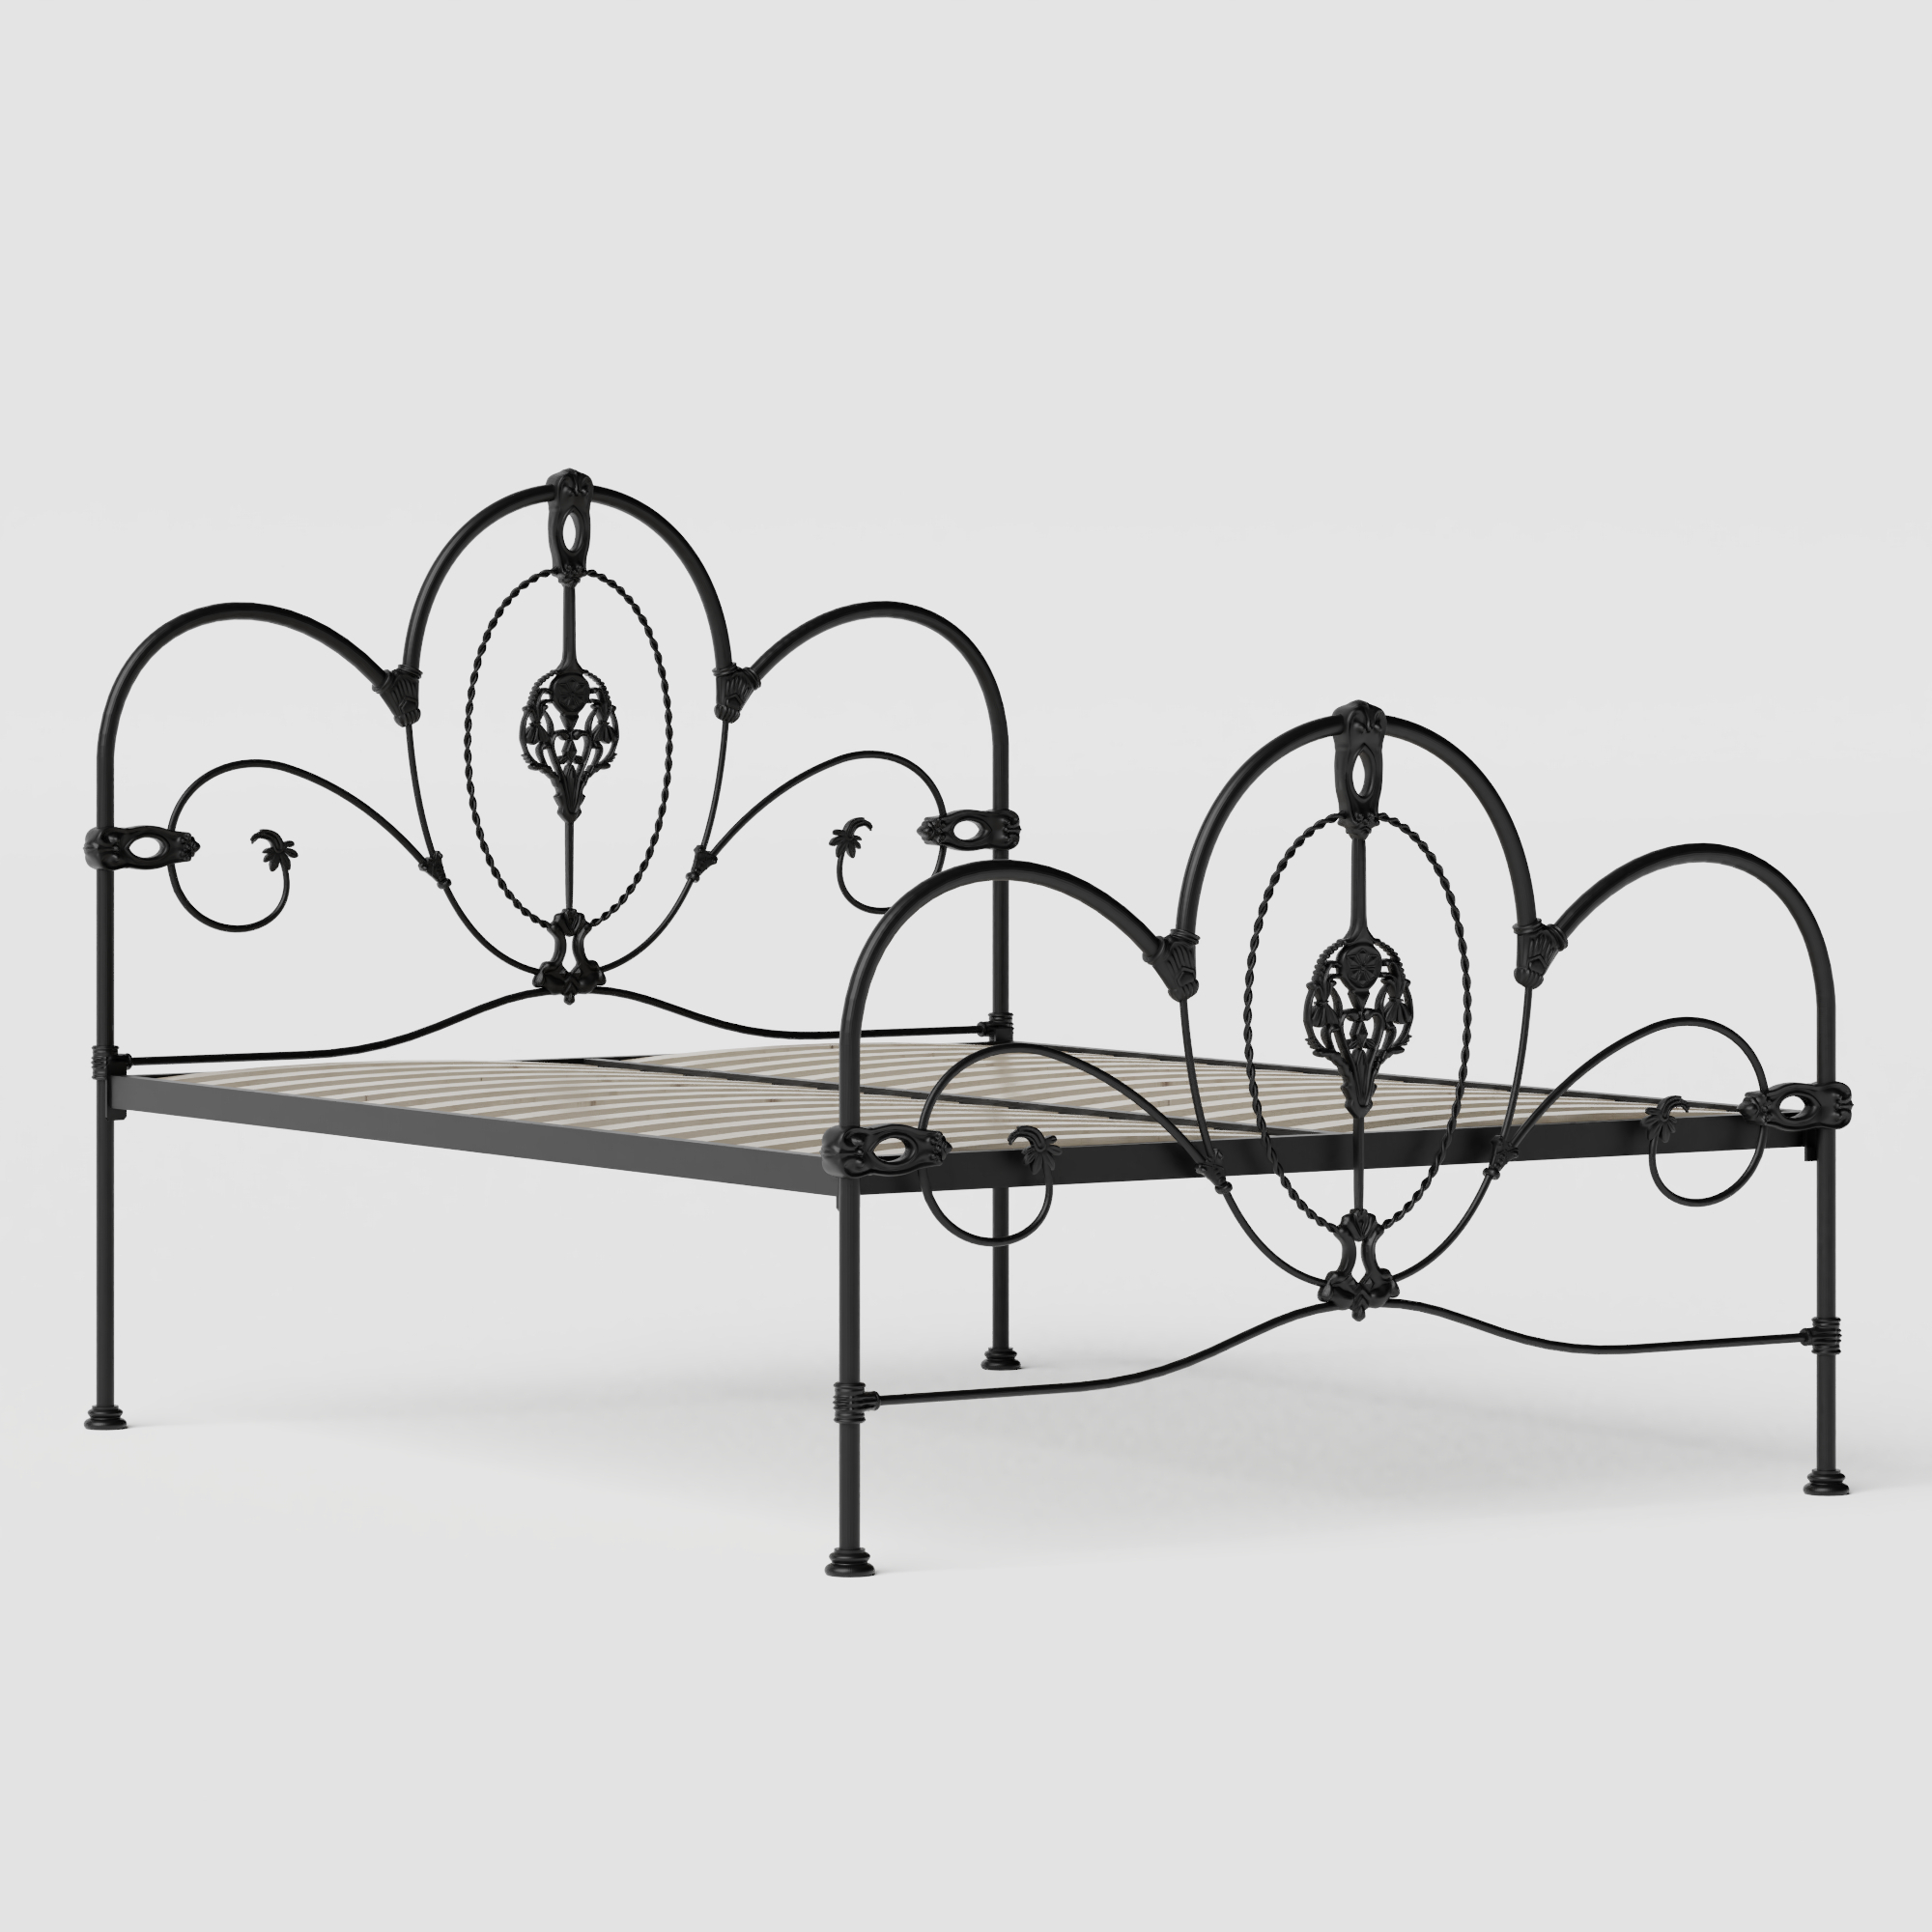 Ballina iron/metal bed in black